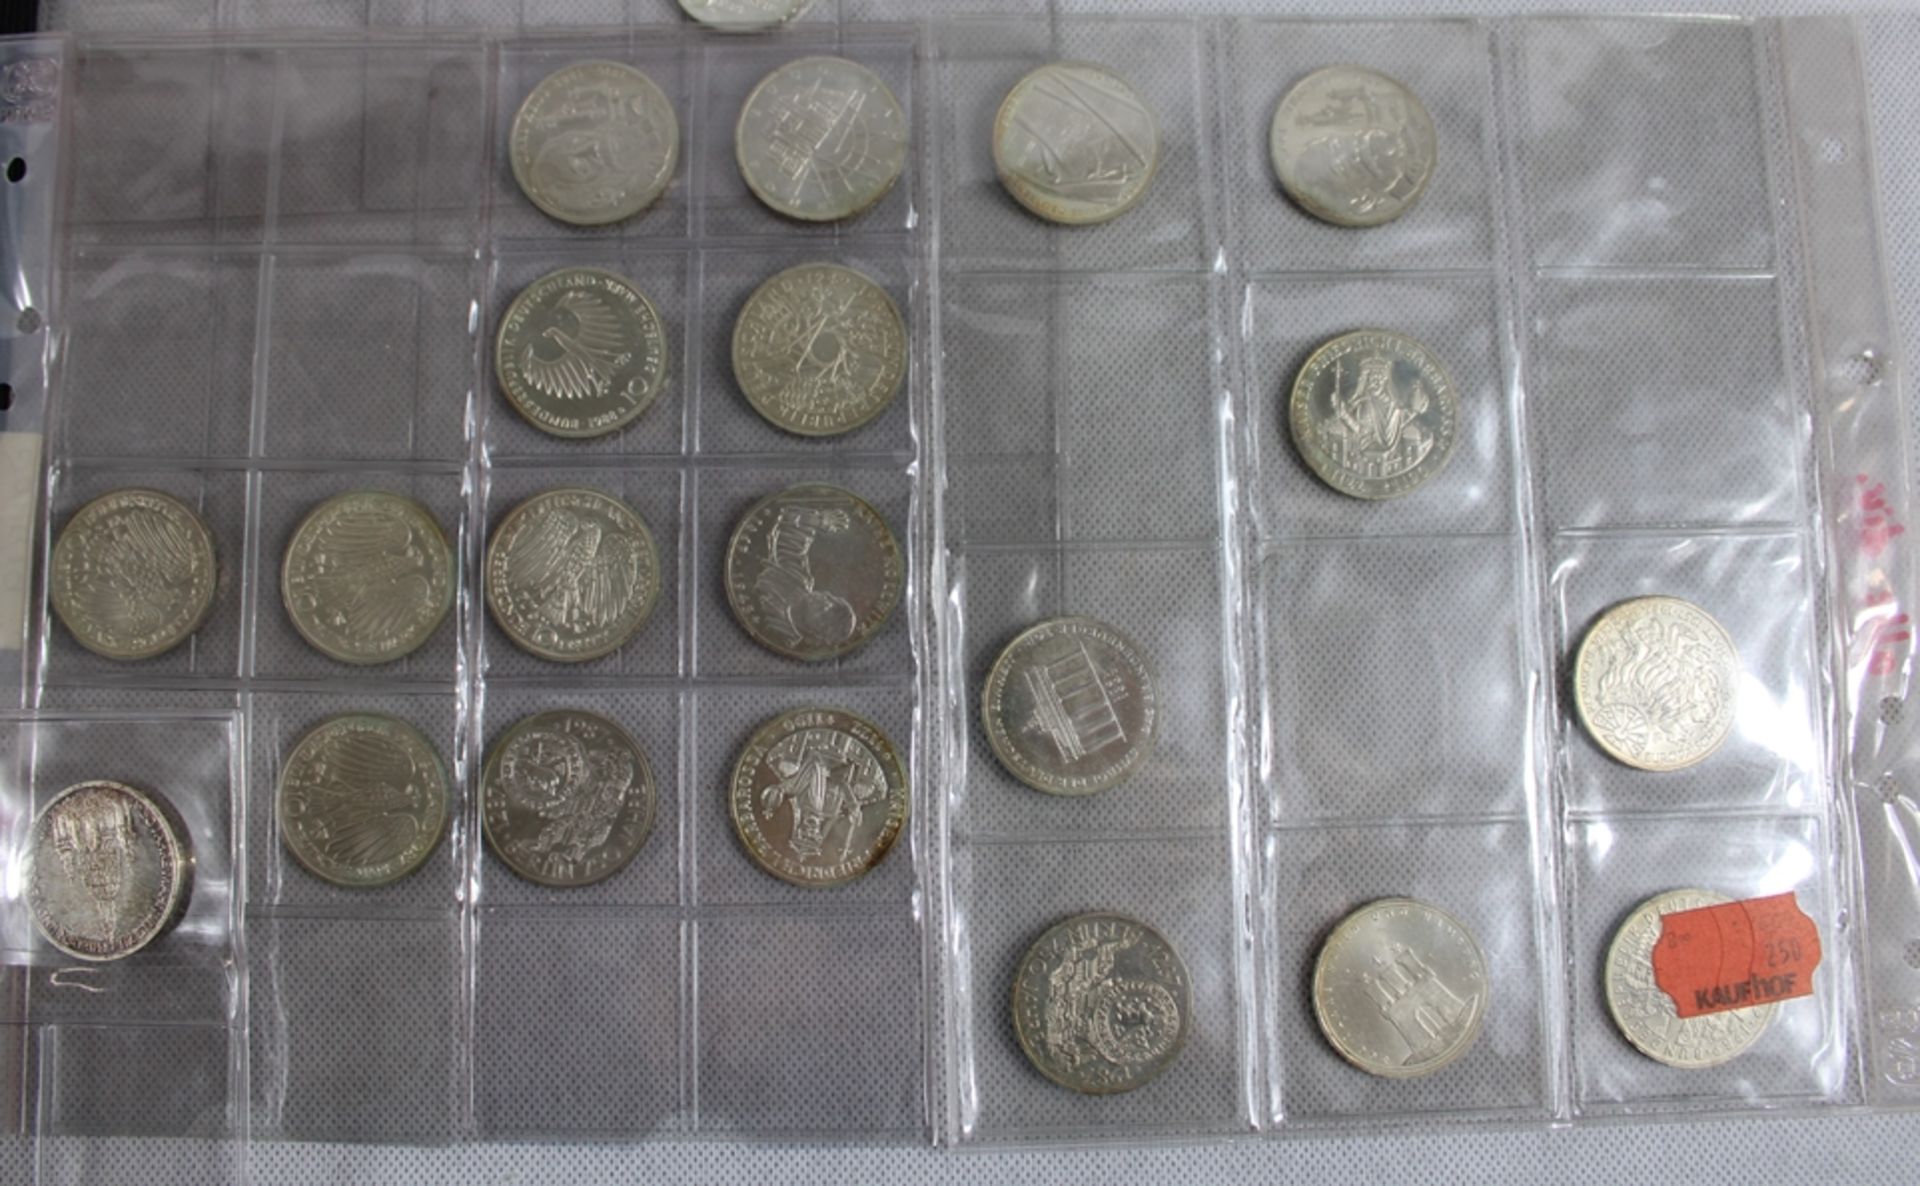 5 DM u. 10 DM Silbermünzen Gedenkmünzen Münzsammlung, darunter 5 x 5 DM u. 73 x 10 DM - Image 4 of 5